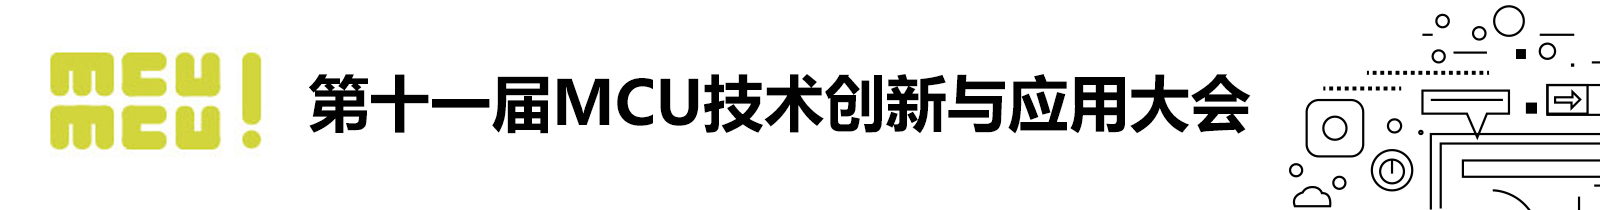 大屏logo